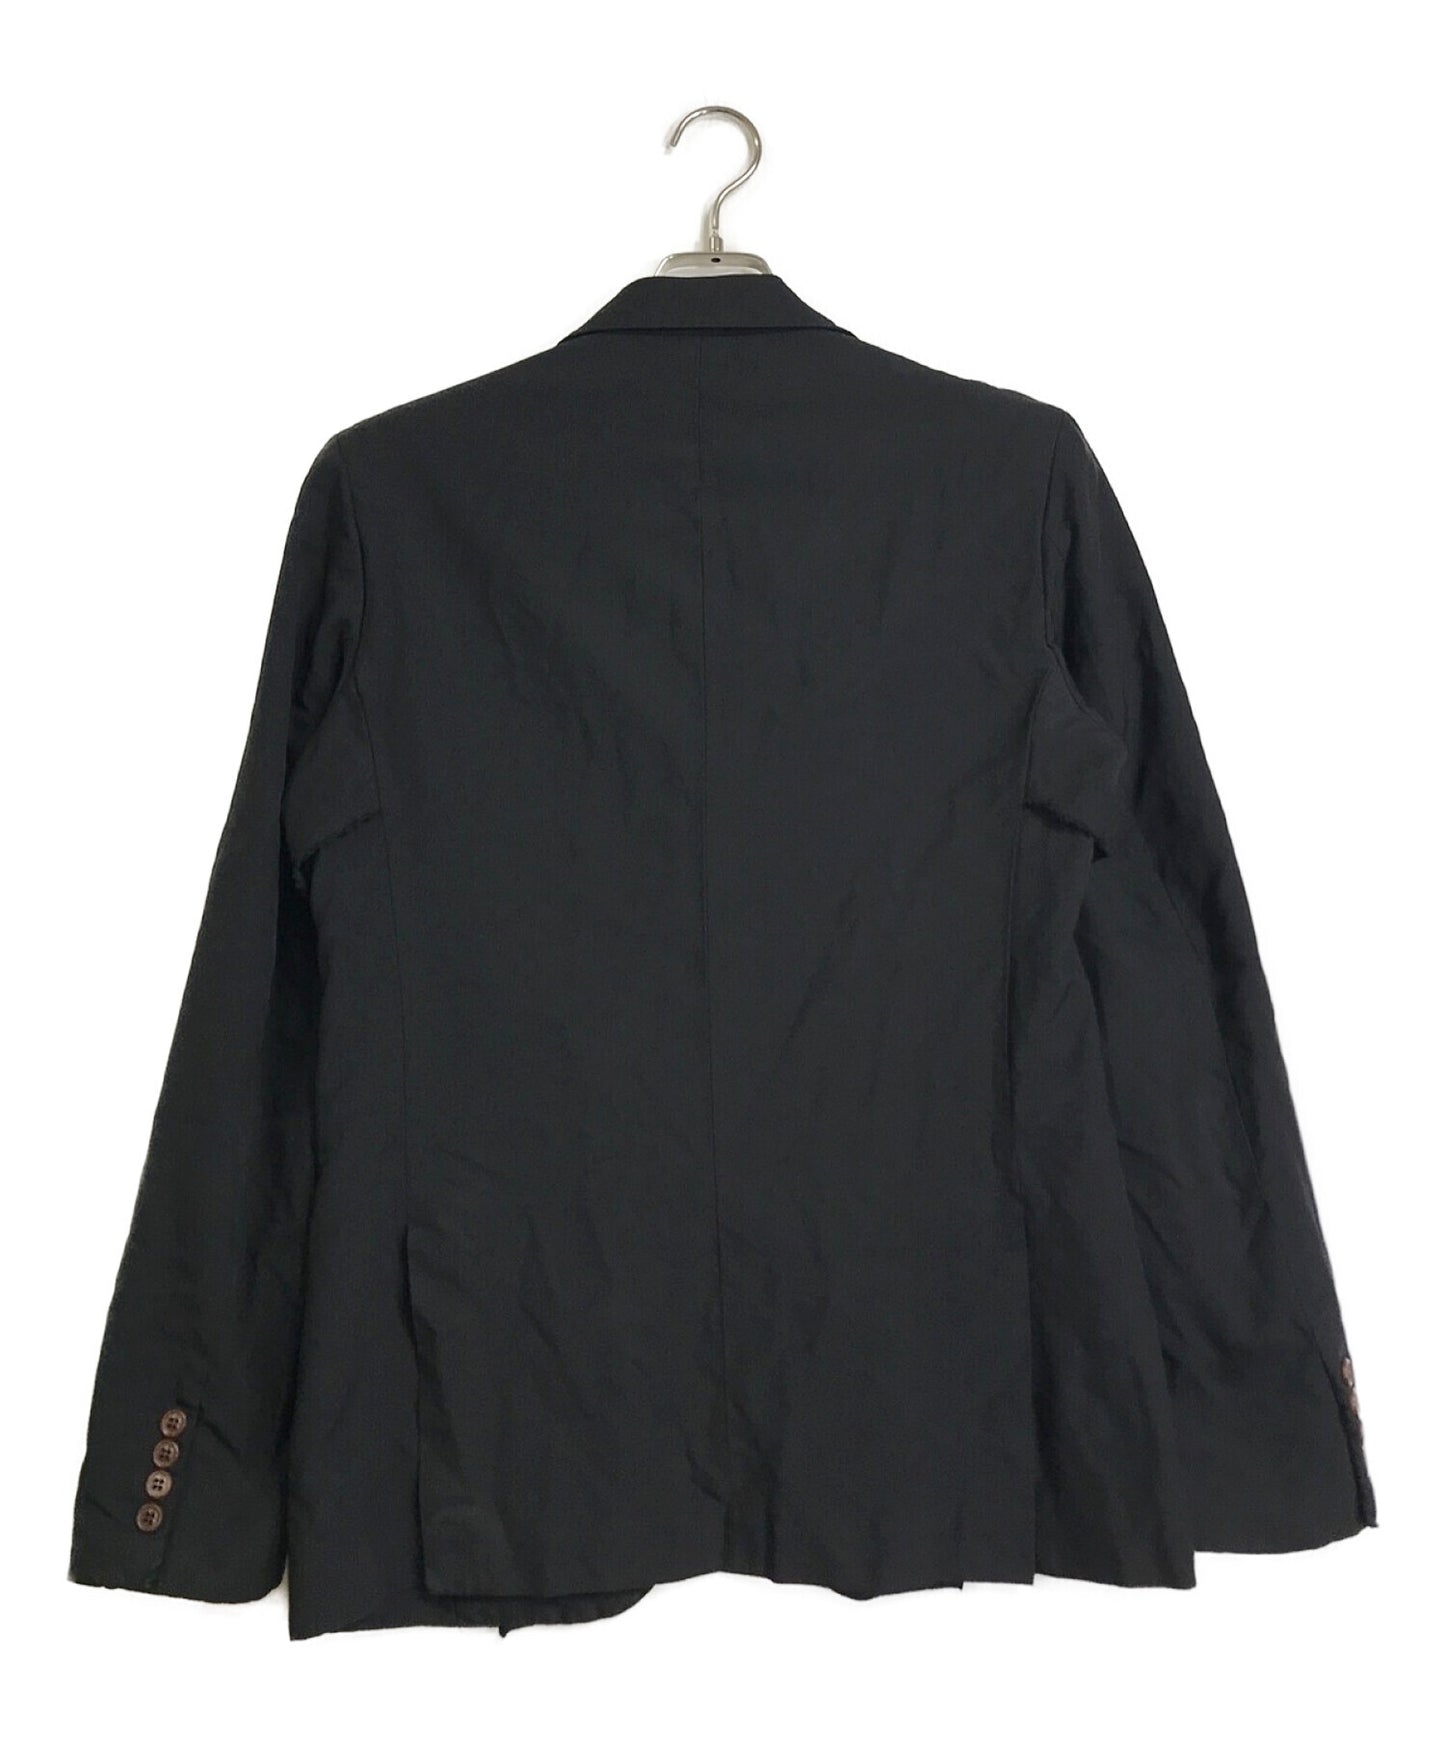 [Pre-owned] COMME des GARCONS HOMME DEUX Dyed processed cut-out design 3B jacket DC-J032